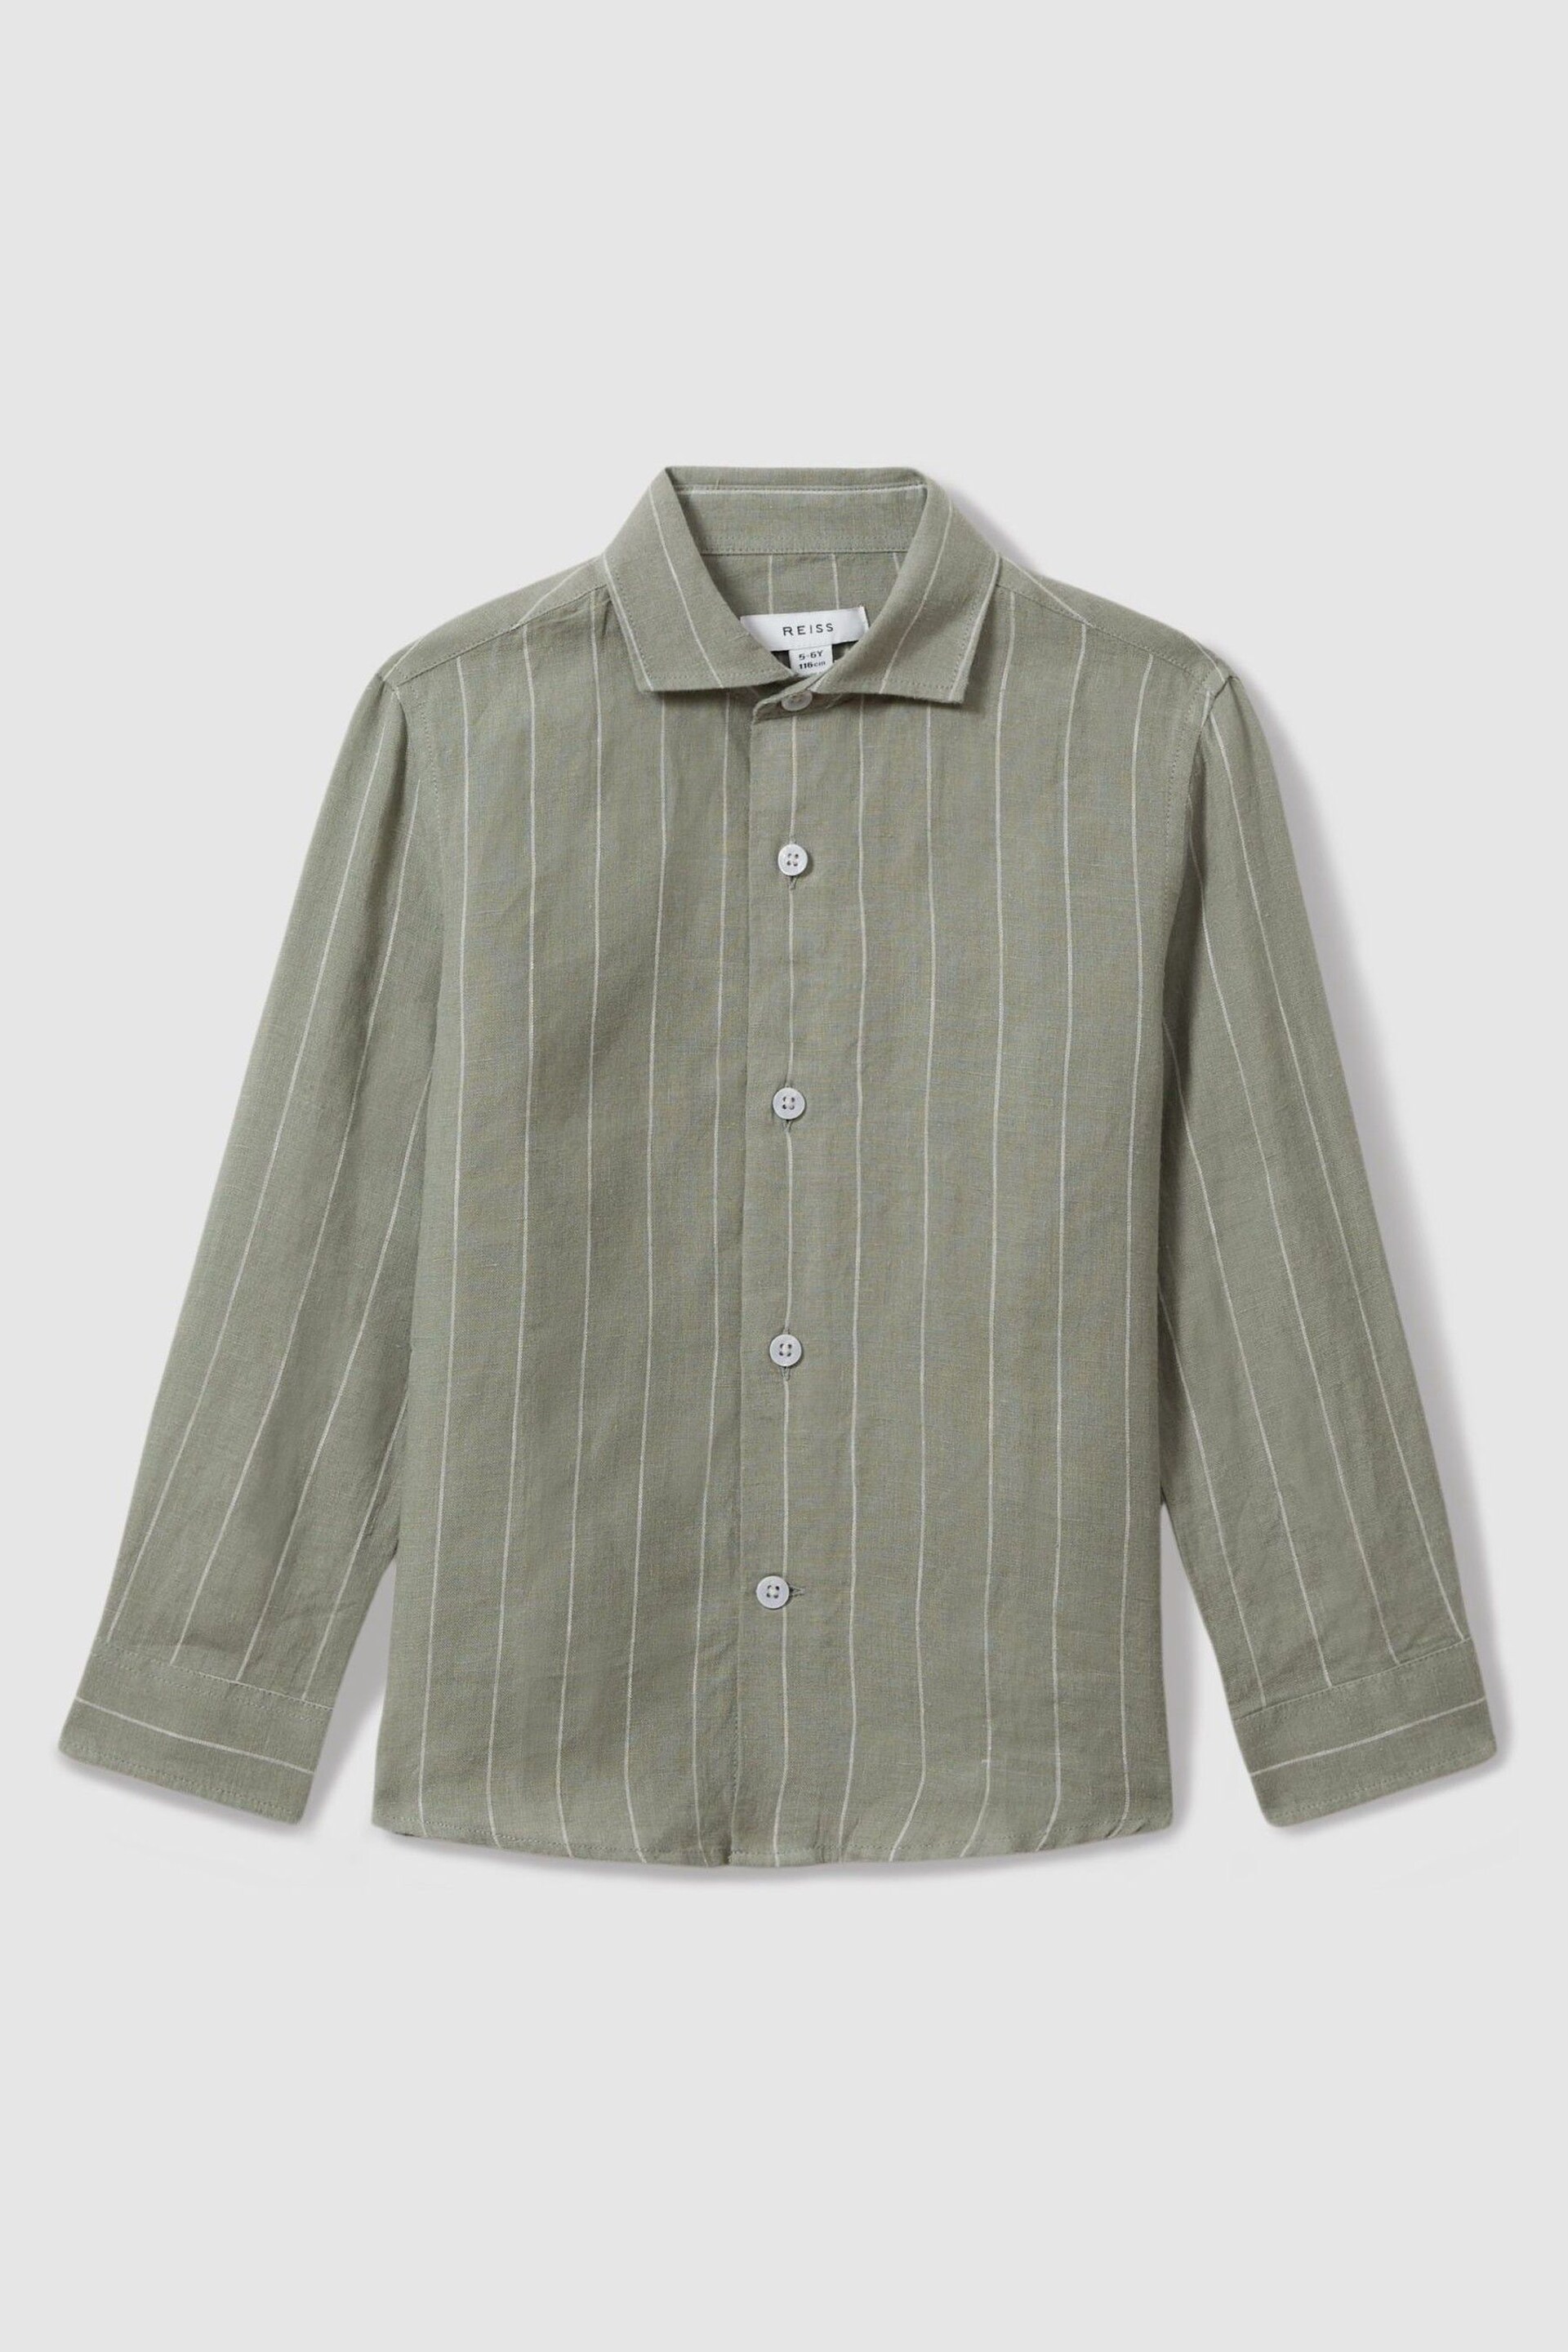 Reiss Sage Ruban Striped Linen Cutaway Collar Shirt - Image 1 of 4